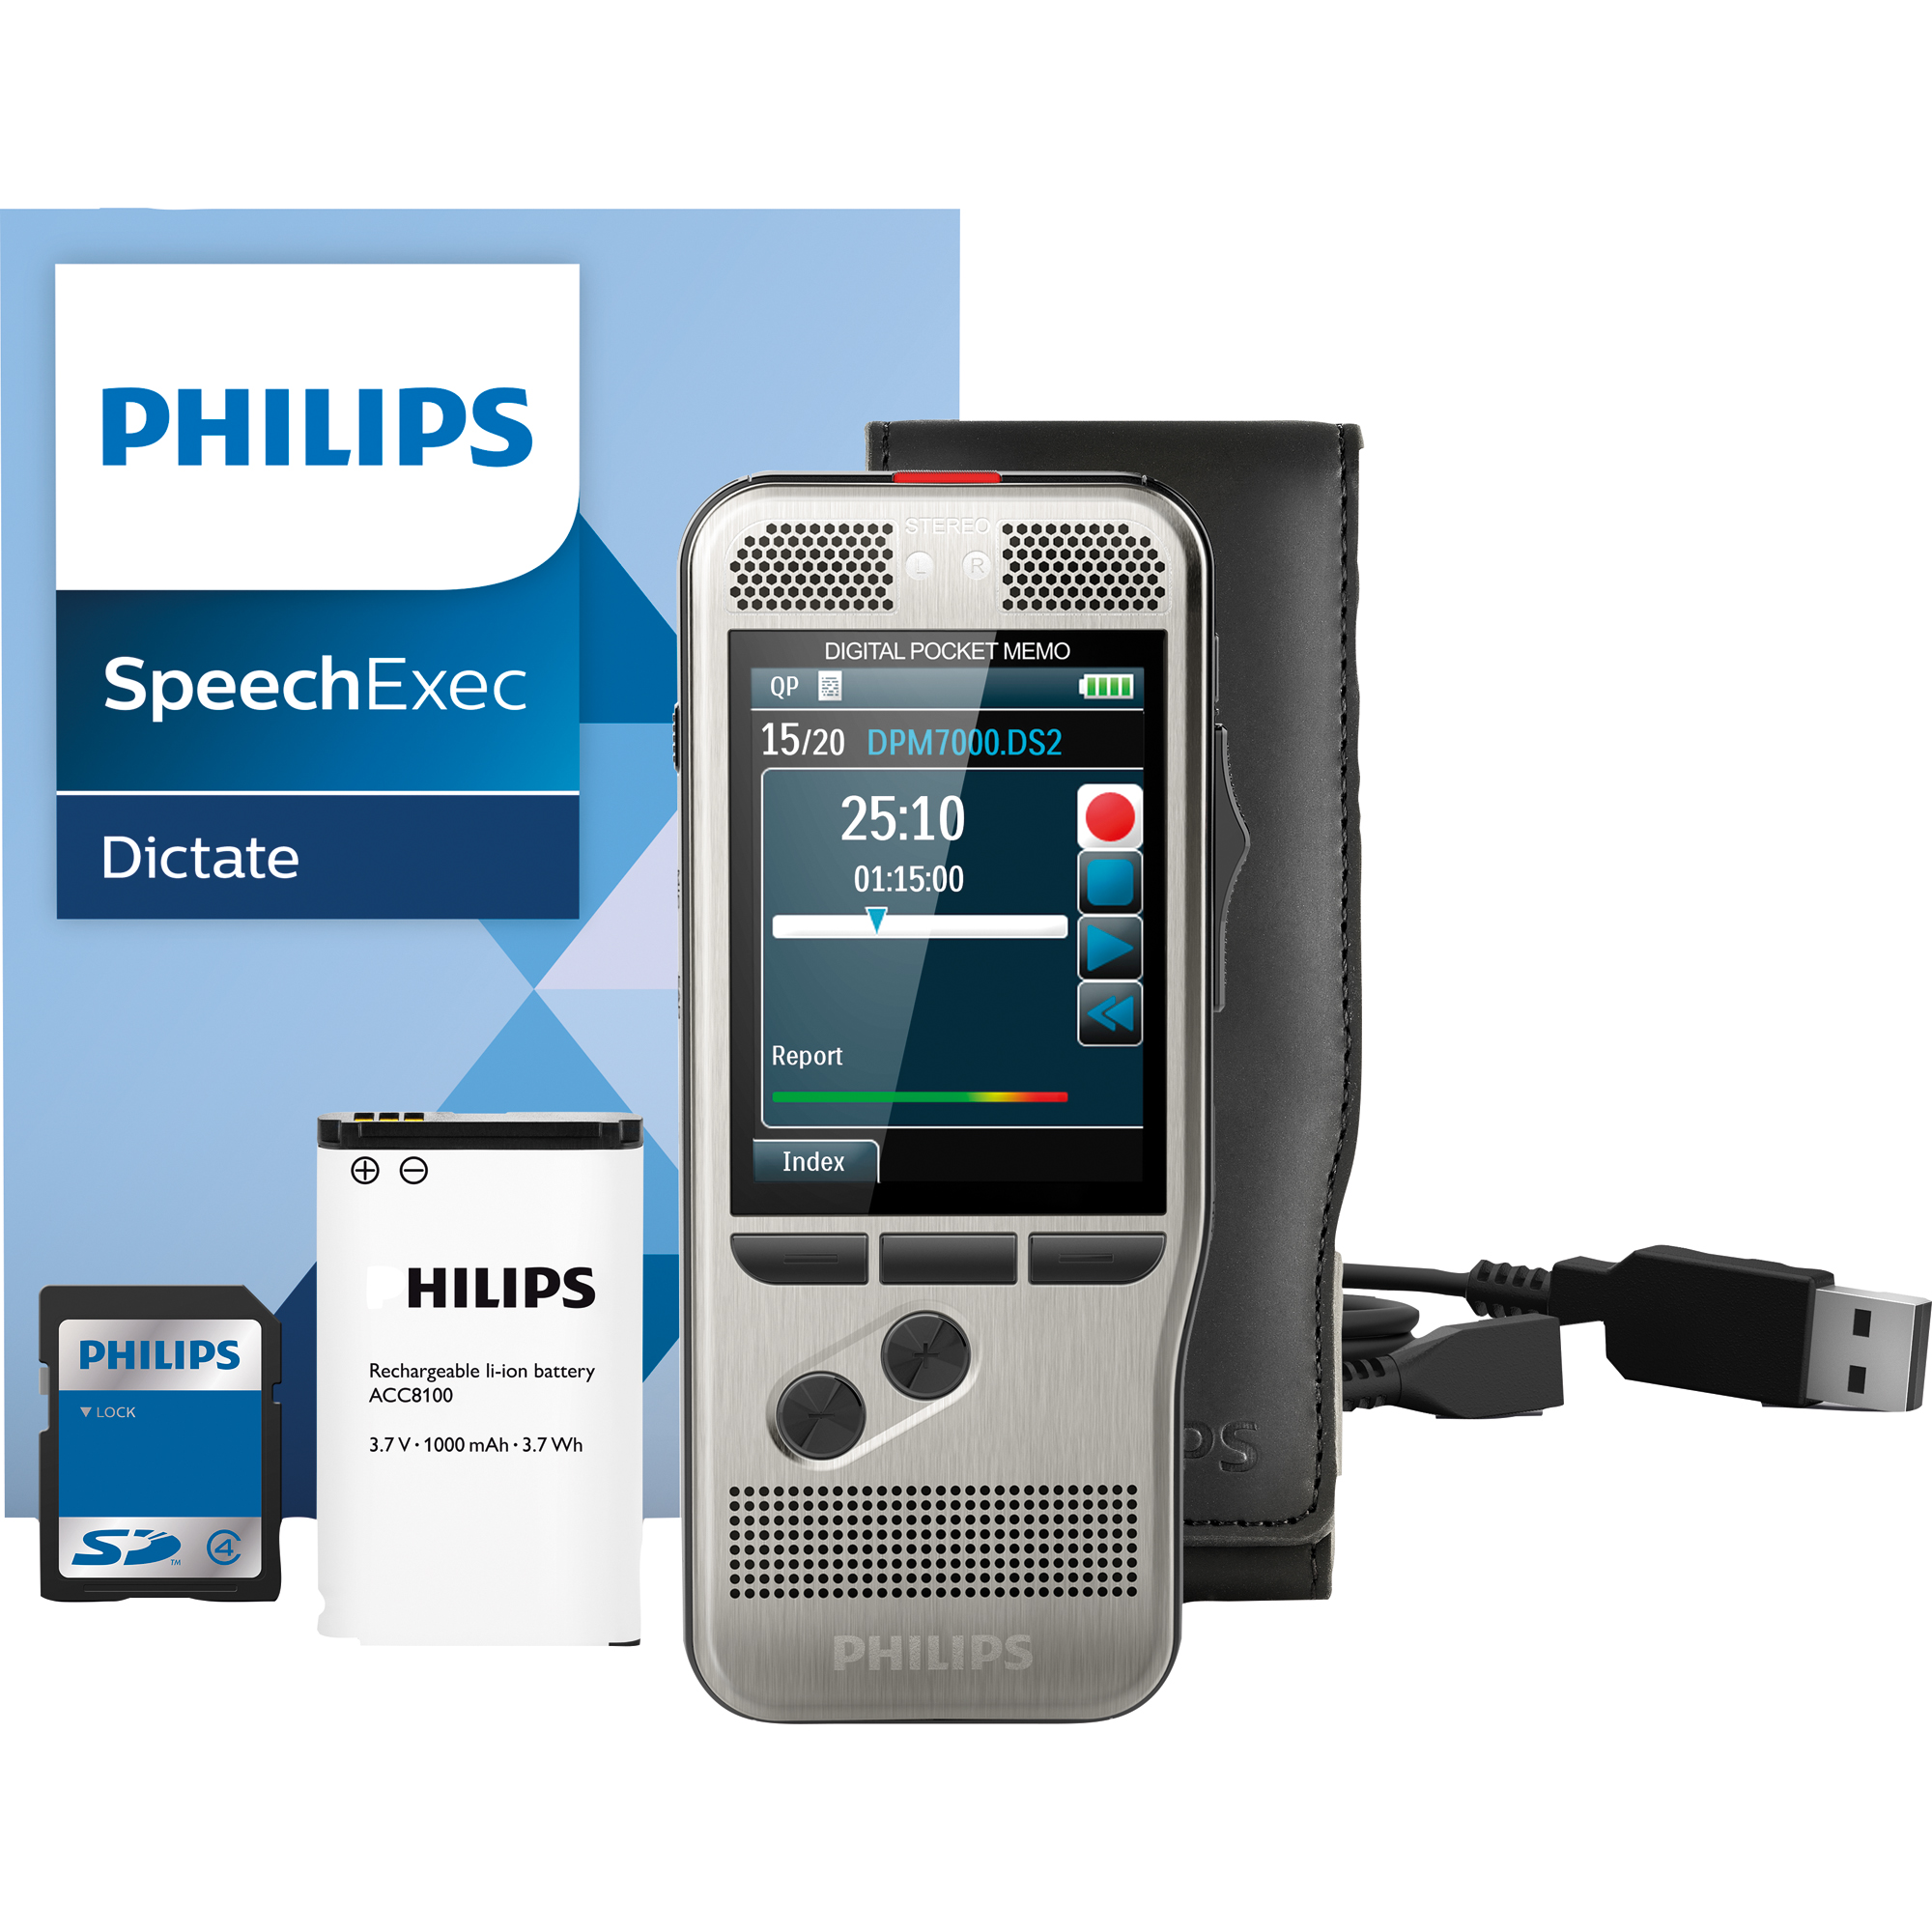 Philips Diktiergerät Digital Pocket Memo DPM 7000